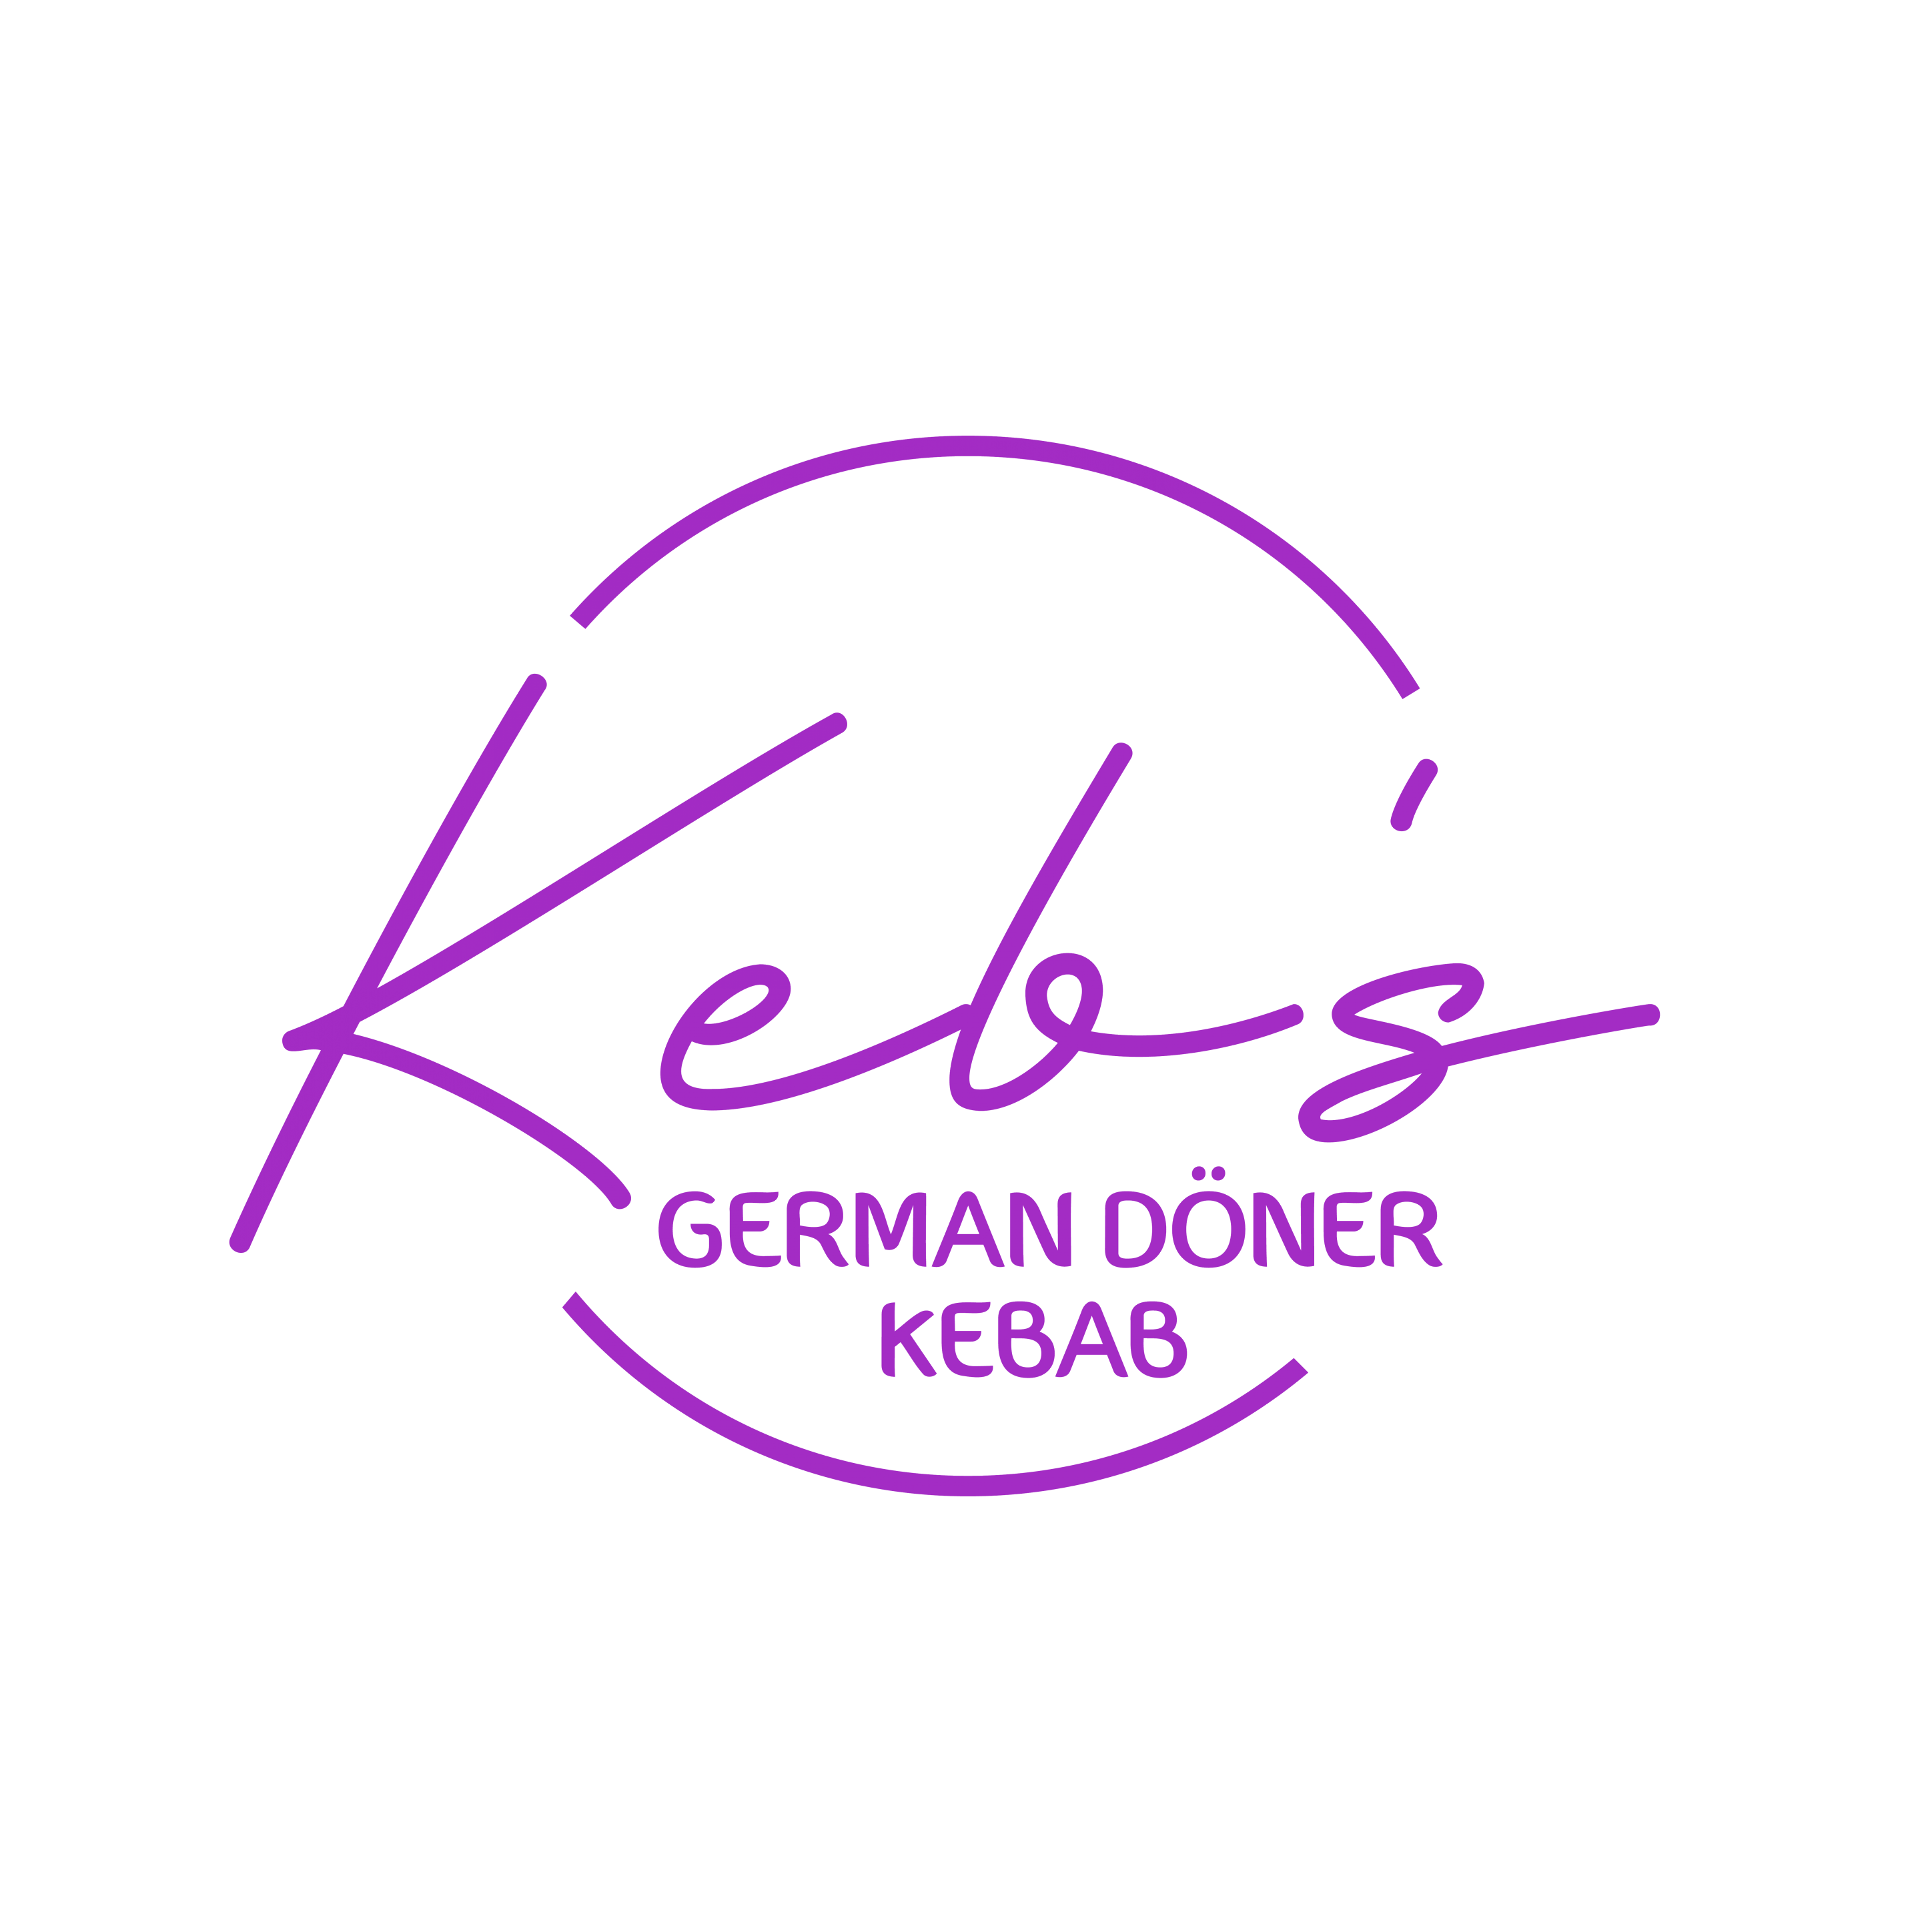 Keb’s